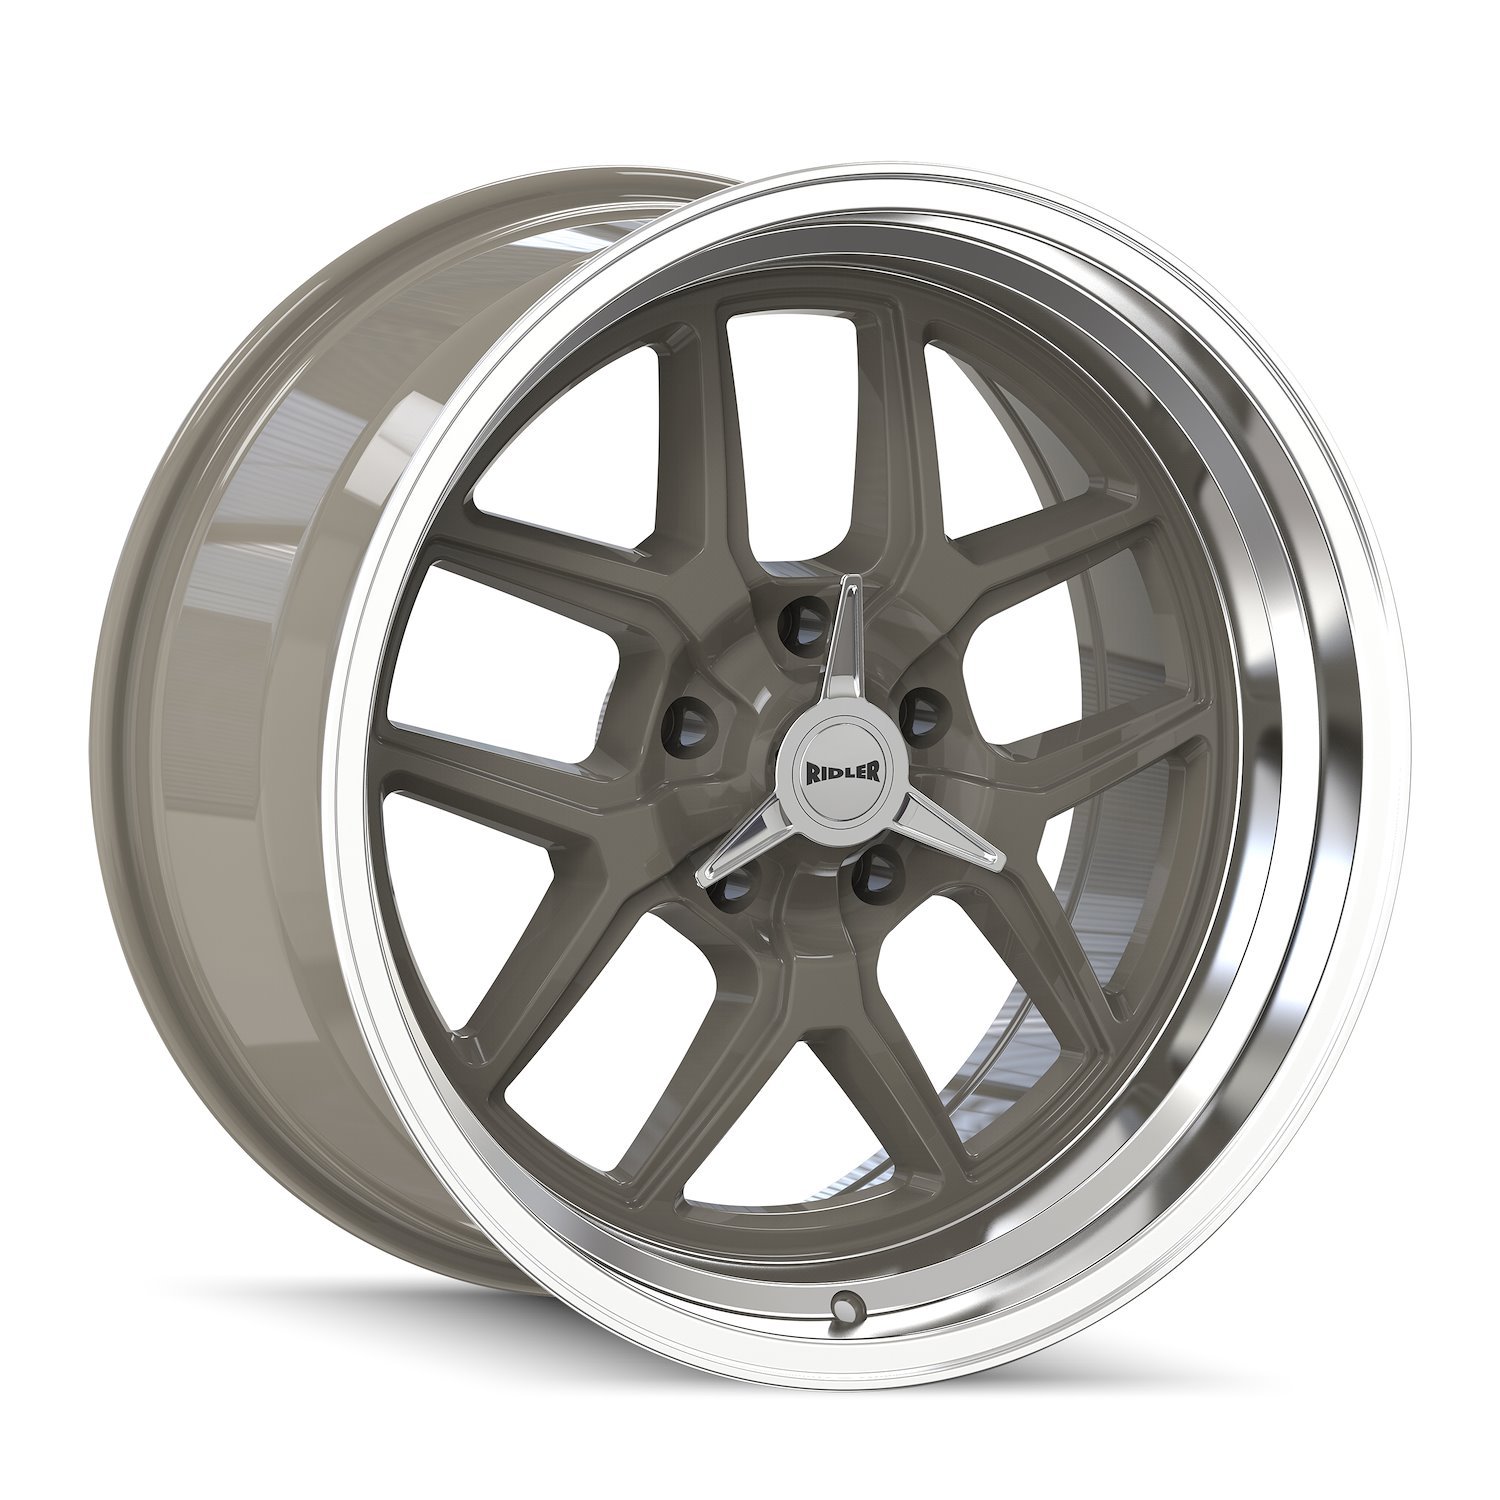 610-7865G 610-Series Wheel [Size: 17" x 8"] Gloss Grey Polished Finish